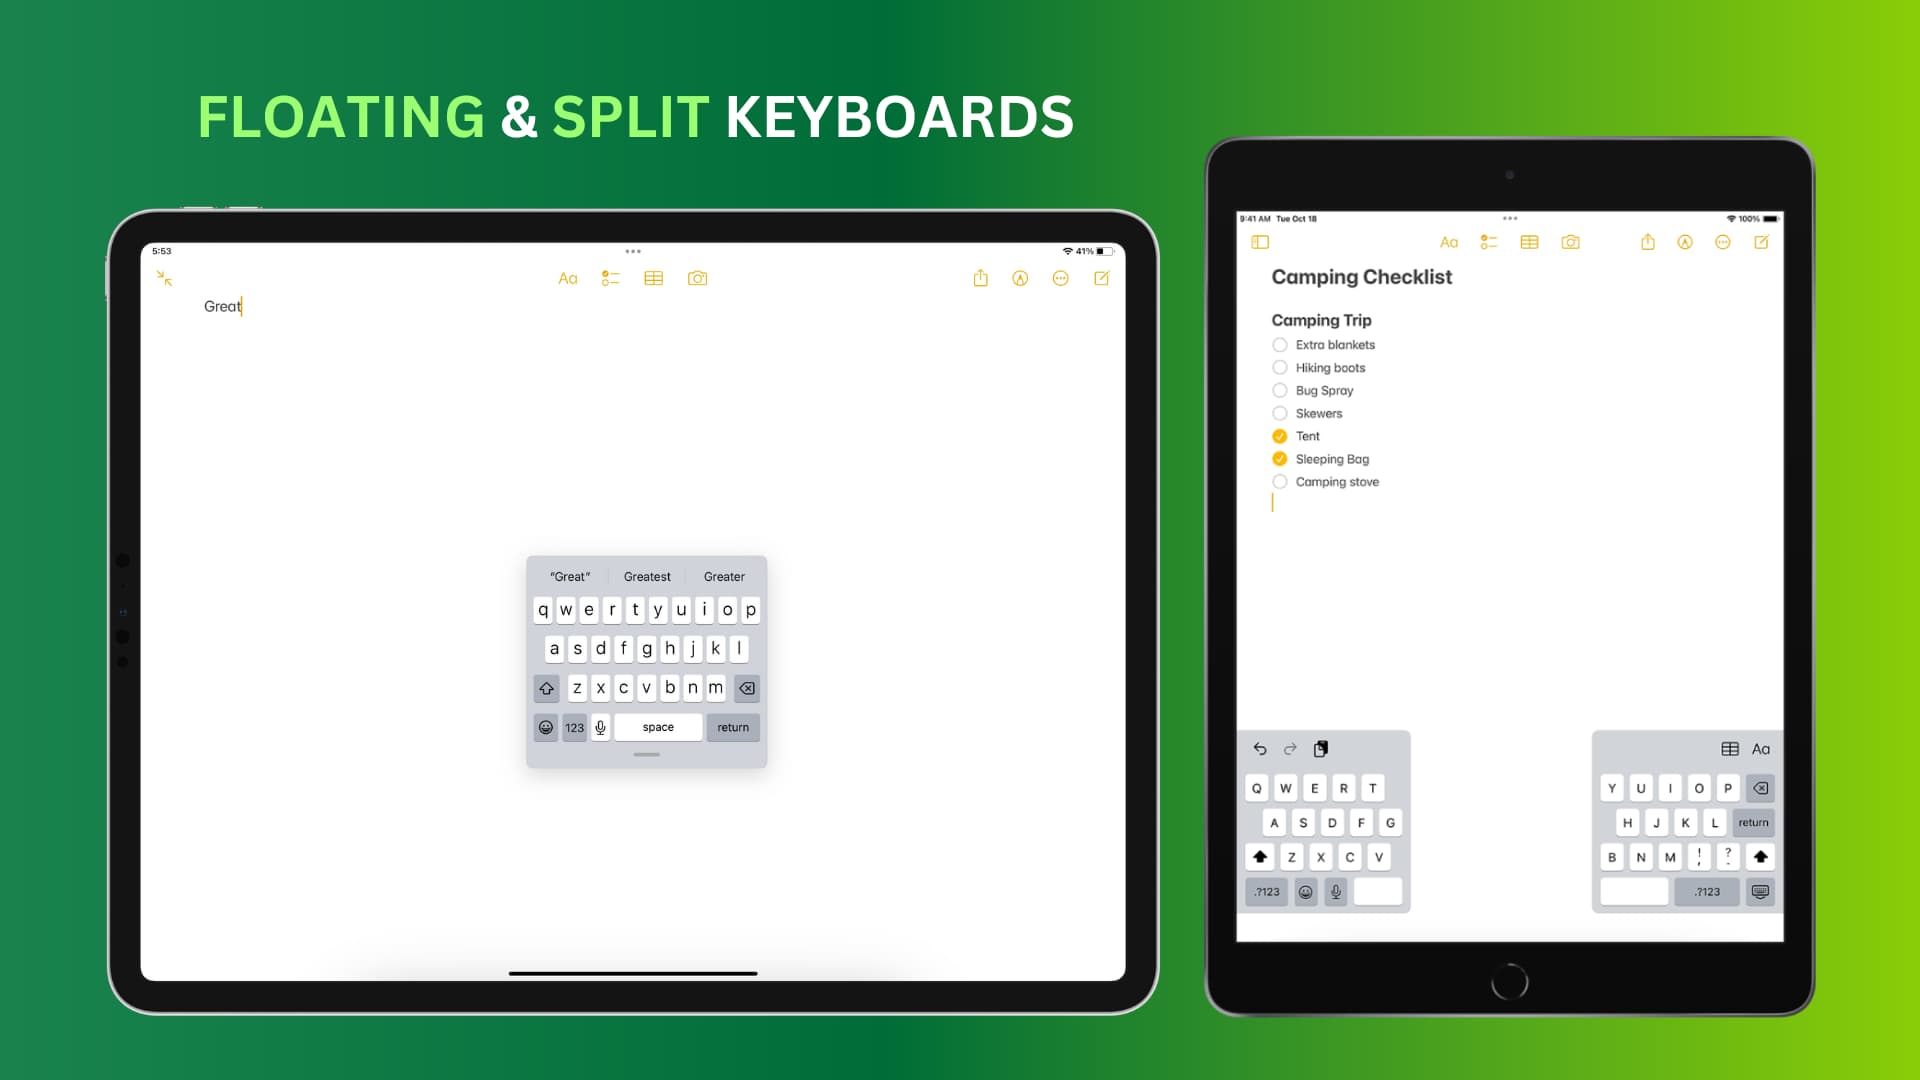 Floating and split keyboards on iPad